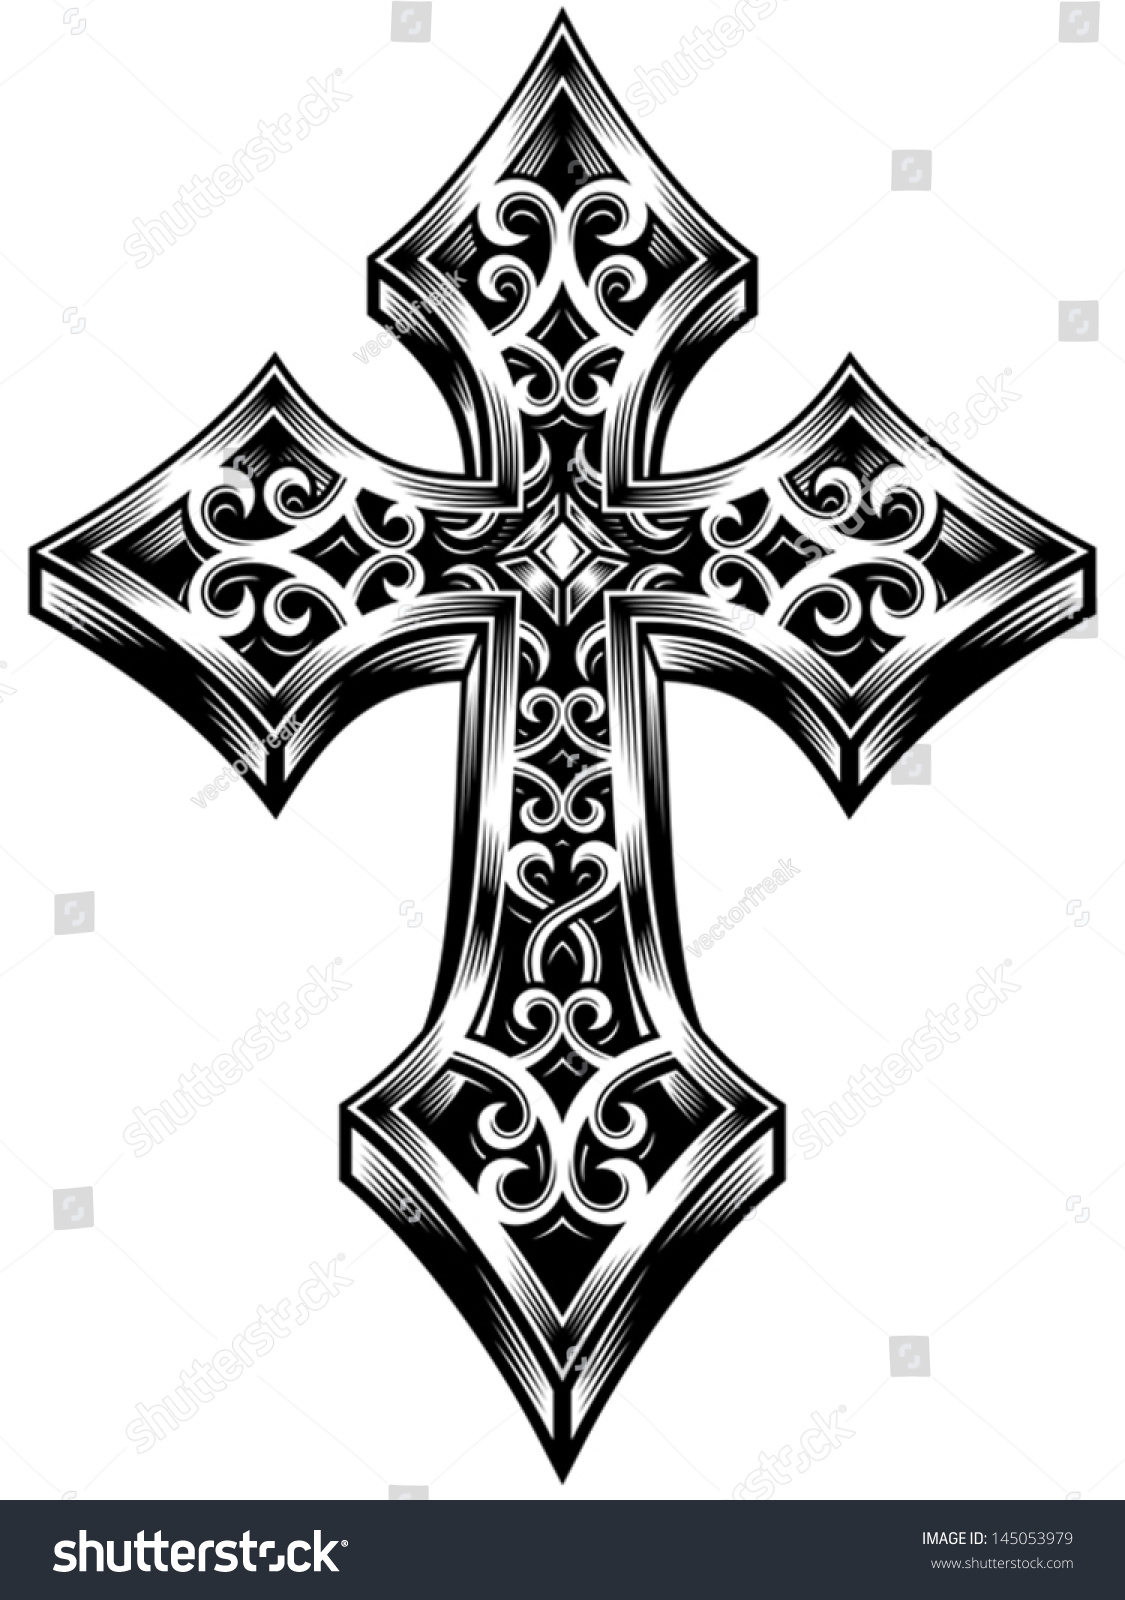 free ornate cross clipart - photo #49